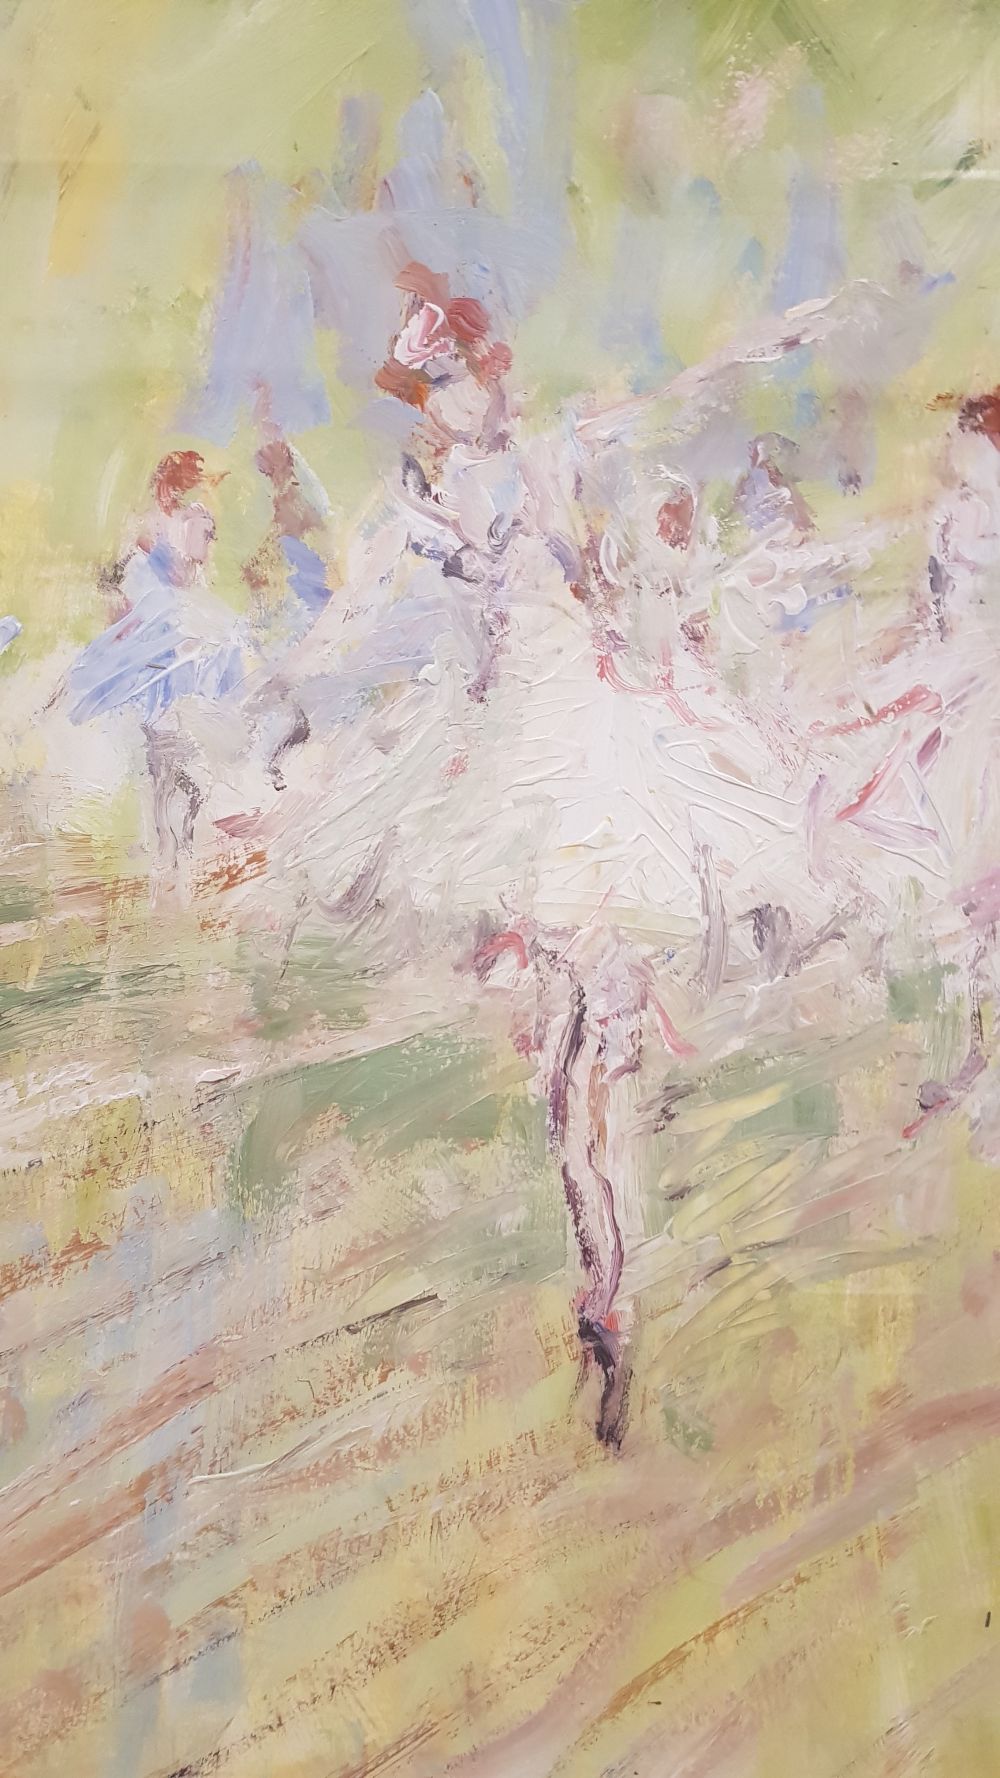 MARIE CARROLL, (IRISH 20TH CENTURY), "DANCING BALLERINAS", acrylic on card, signed lower right, - Image 2 of 5